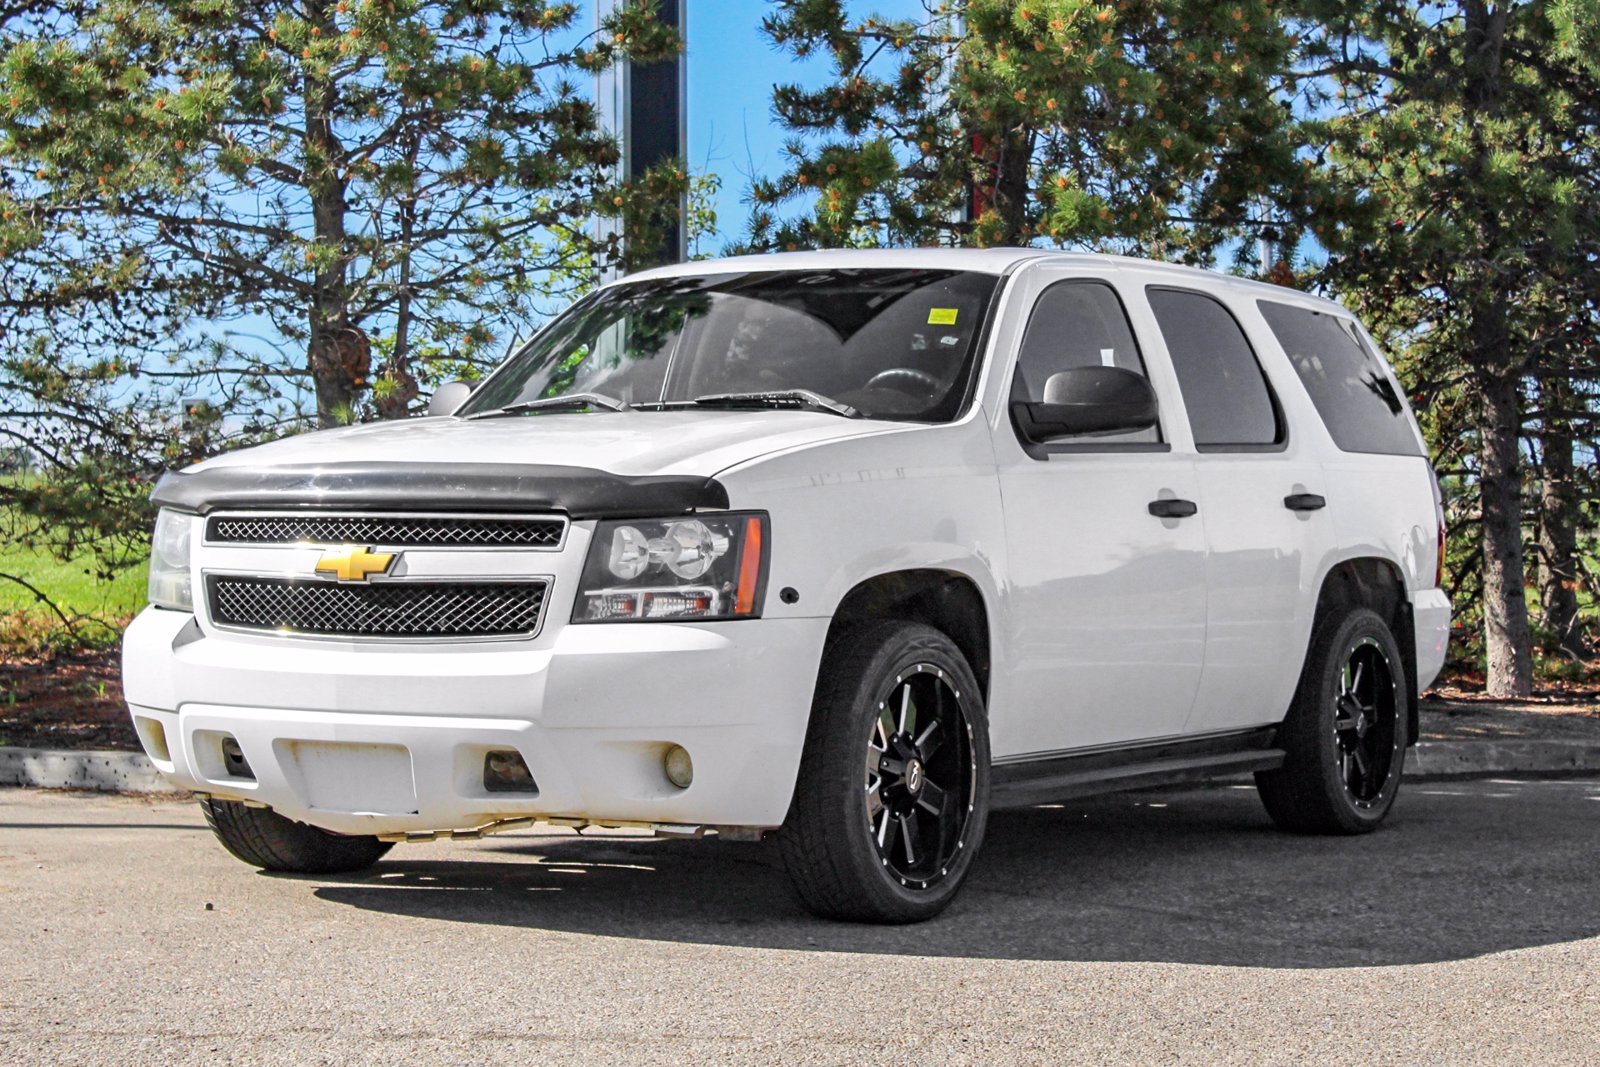 PreOwned 2013 Chevrolet Tahoe Police Interceptor Sport